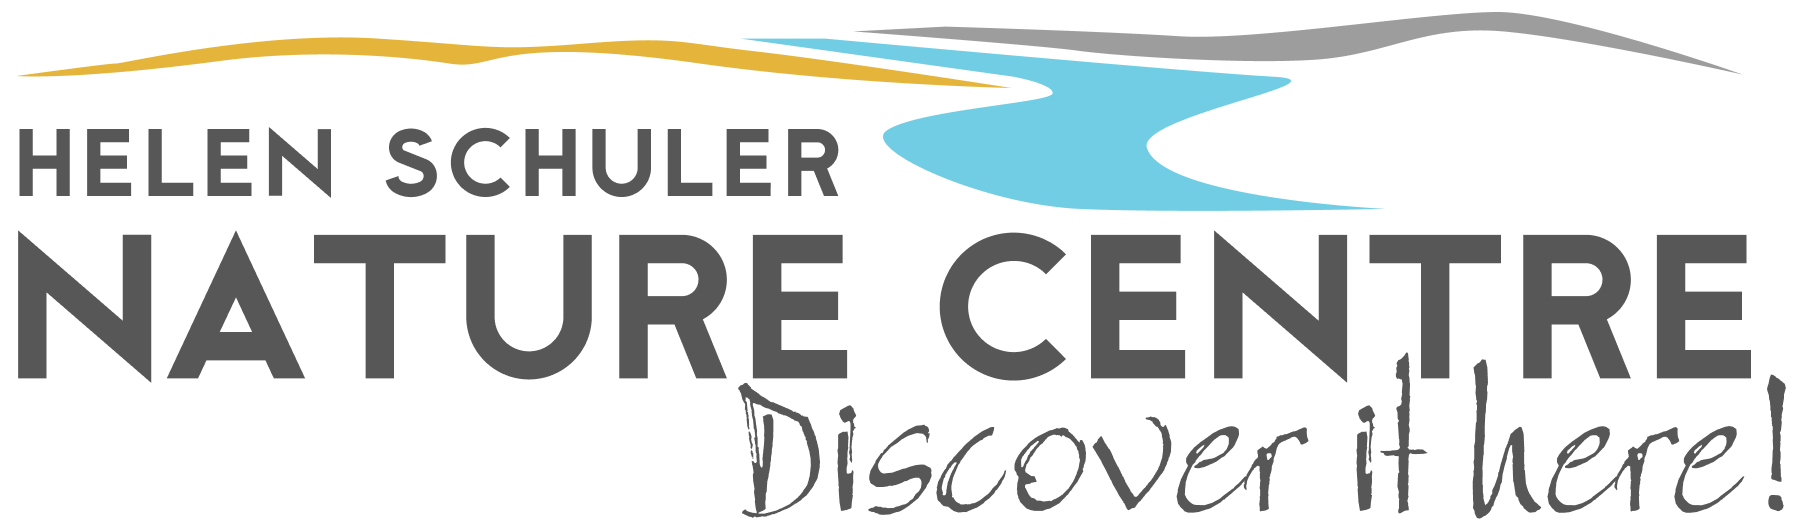 Logo for Helen Schuler Nature Centre on a transparent background